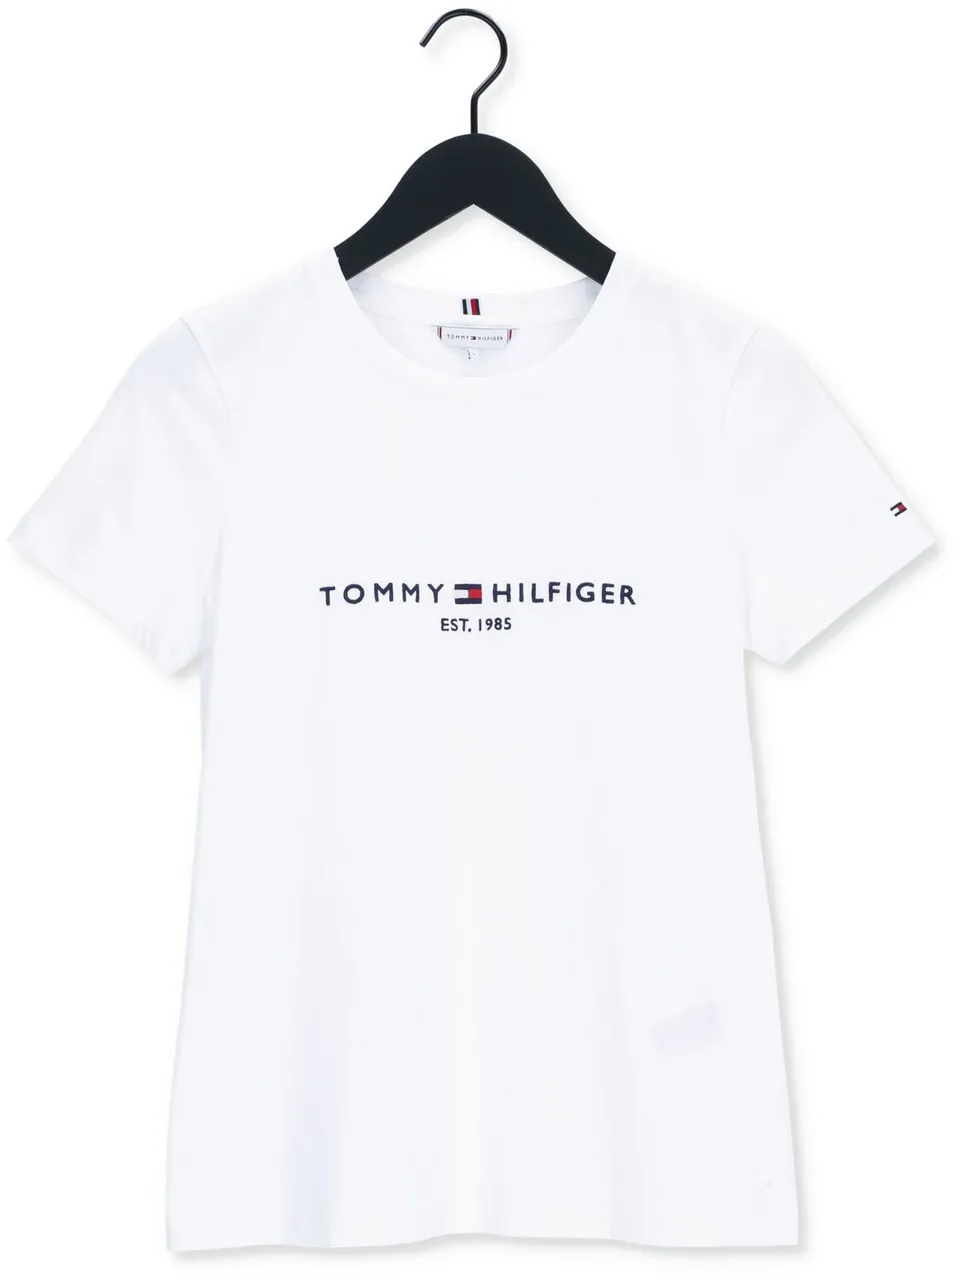 TOMMY HILFIGER Dames Tops & T-shirts Heritage Hilfiger C-nk Reg Tee - Wit